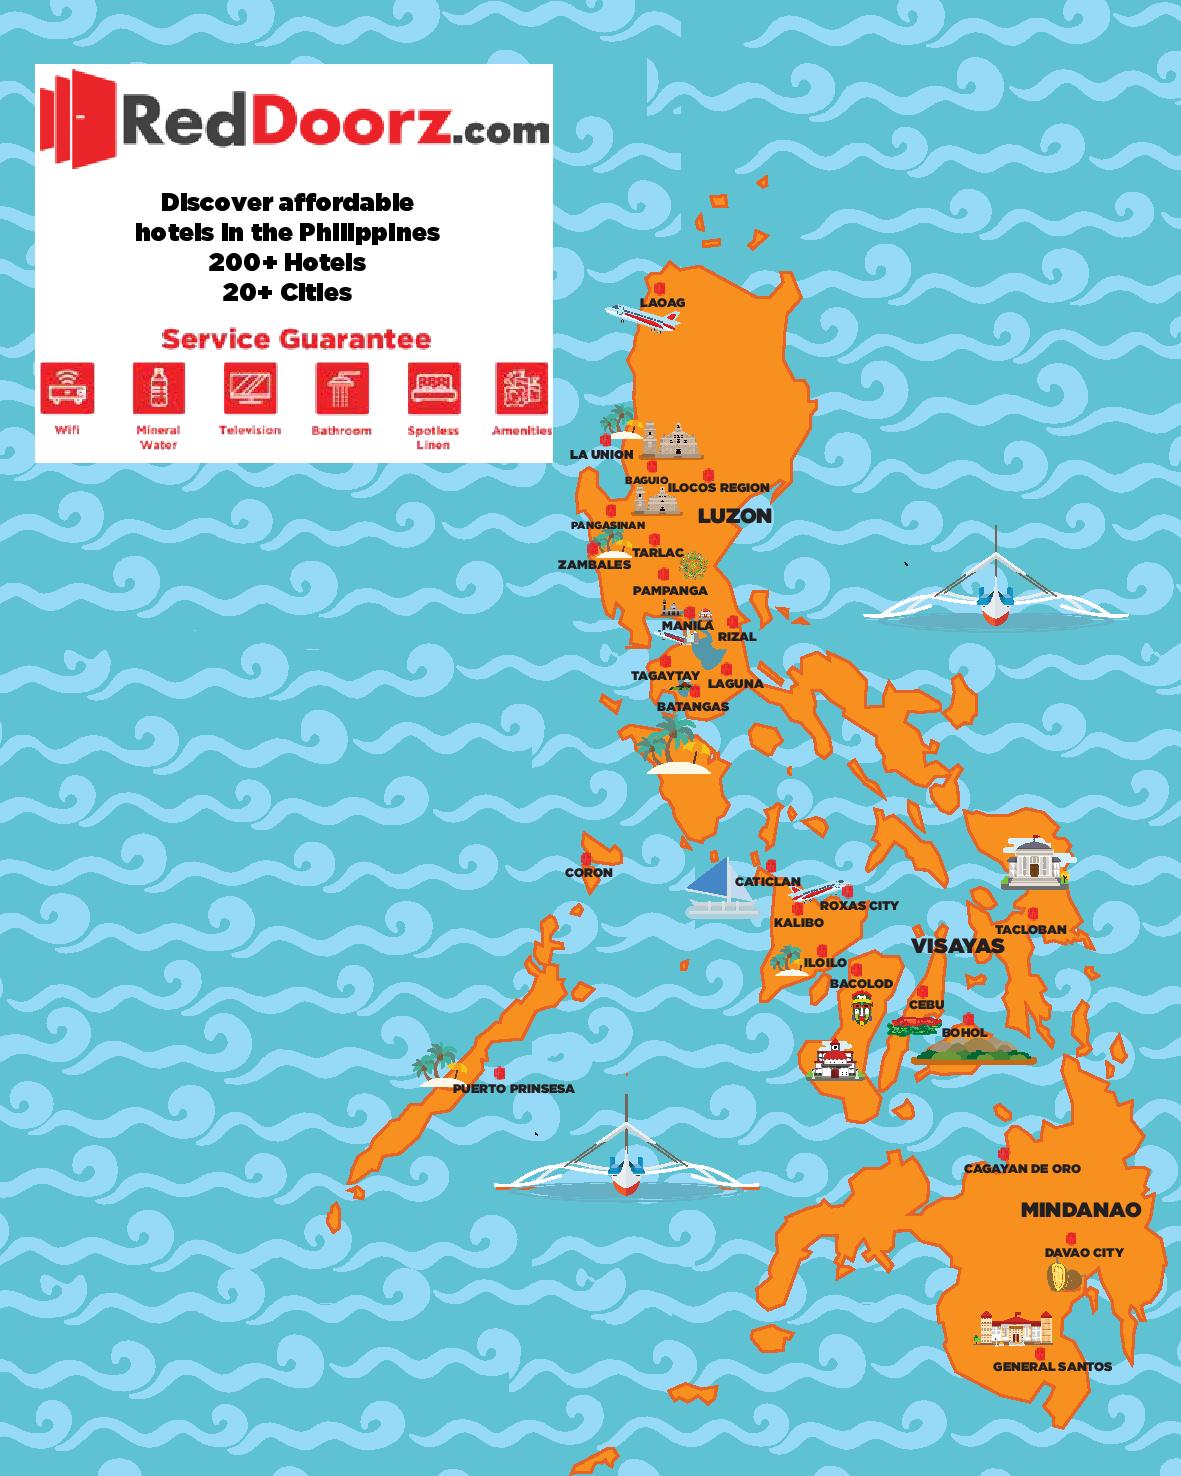 RedDoorz recommends 4 Philippine tourist spots: Mayon, La Union, Campuestohan Highland, Mapawa Adventure Park